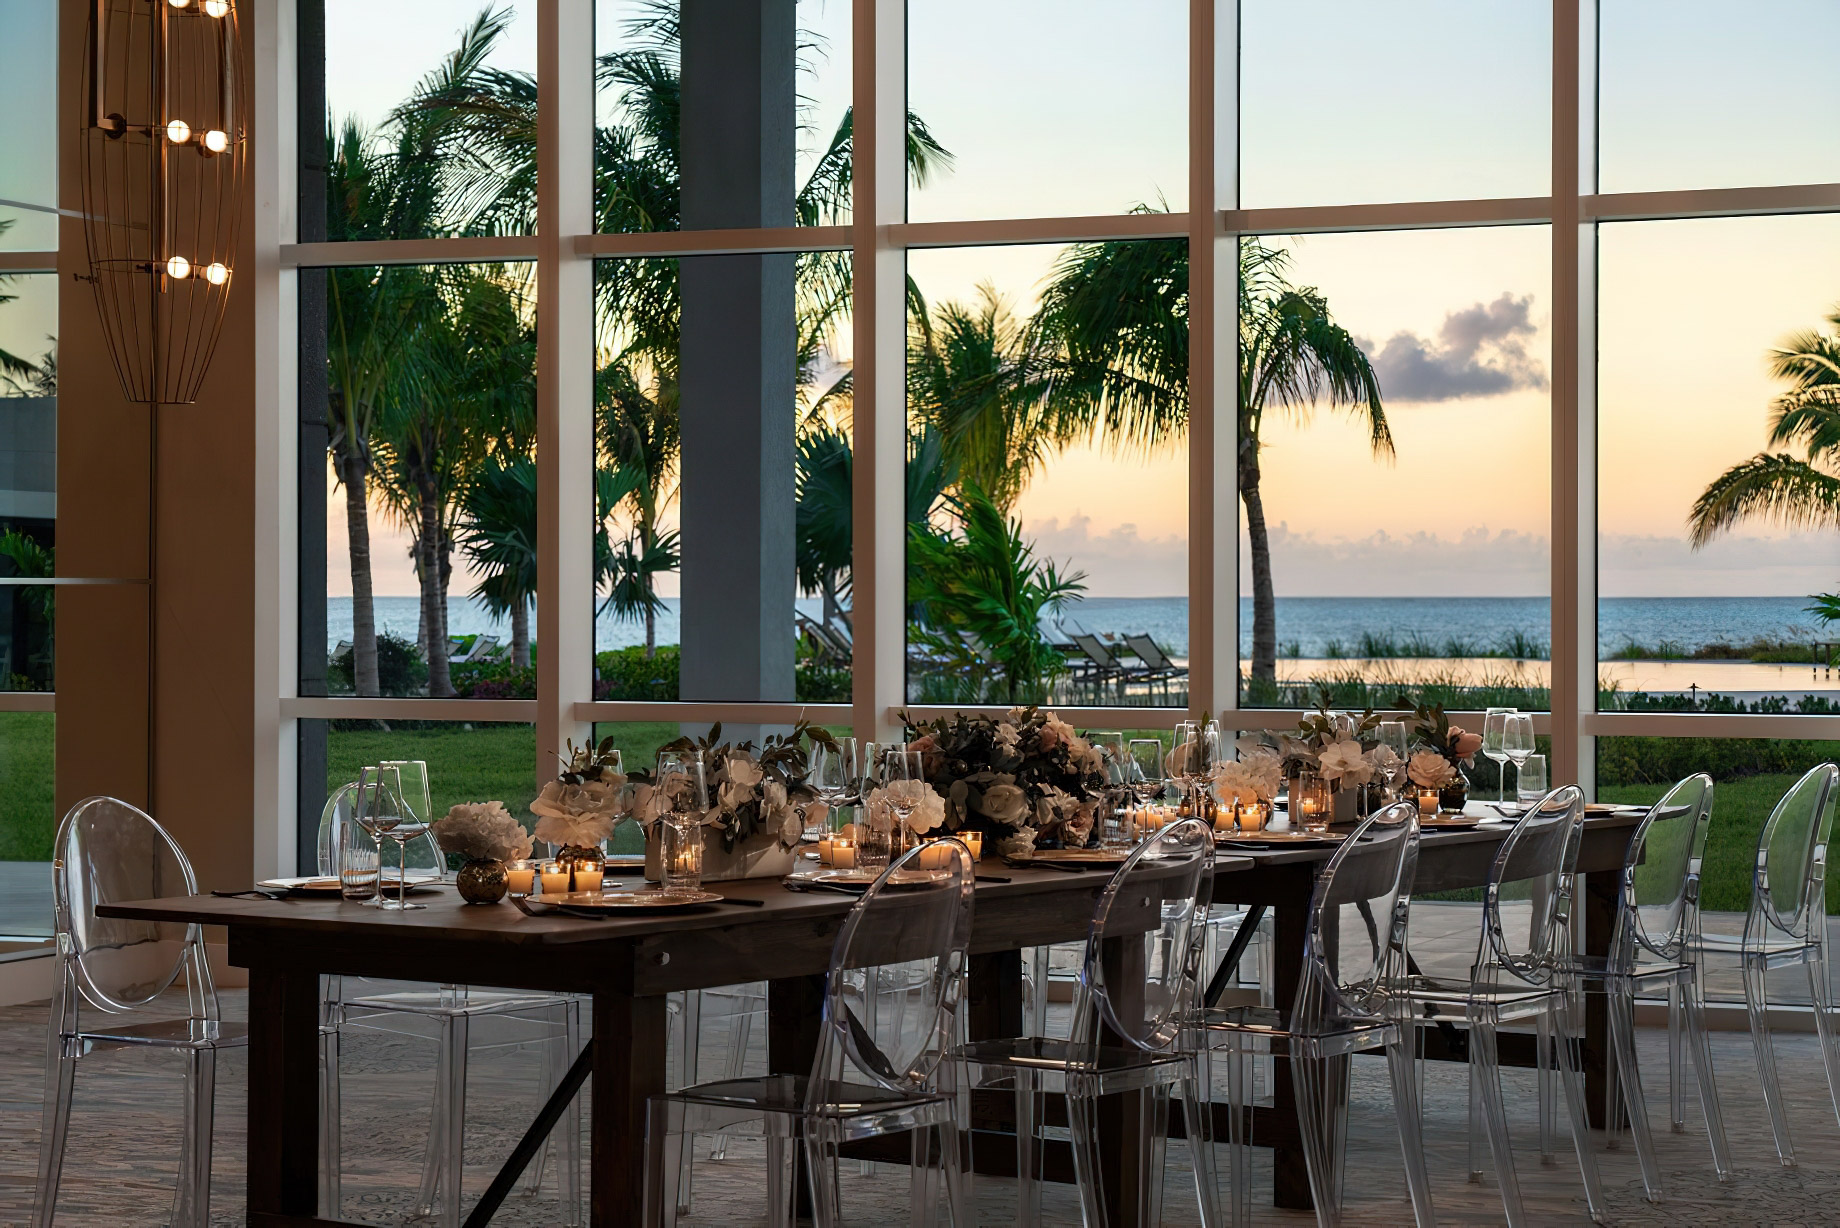 The Ritz-Carlton, Turks & Caicos Resort – Providenciales, Turks and Caicos Islands – Ballroom Table